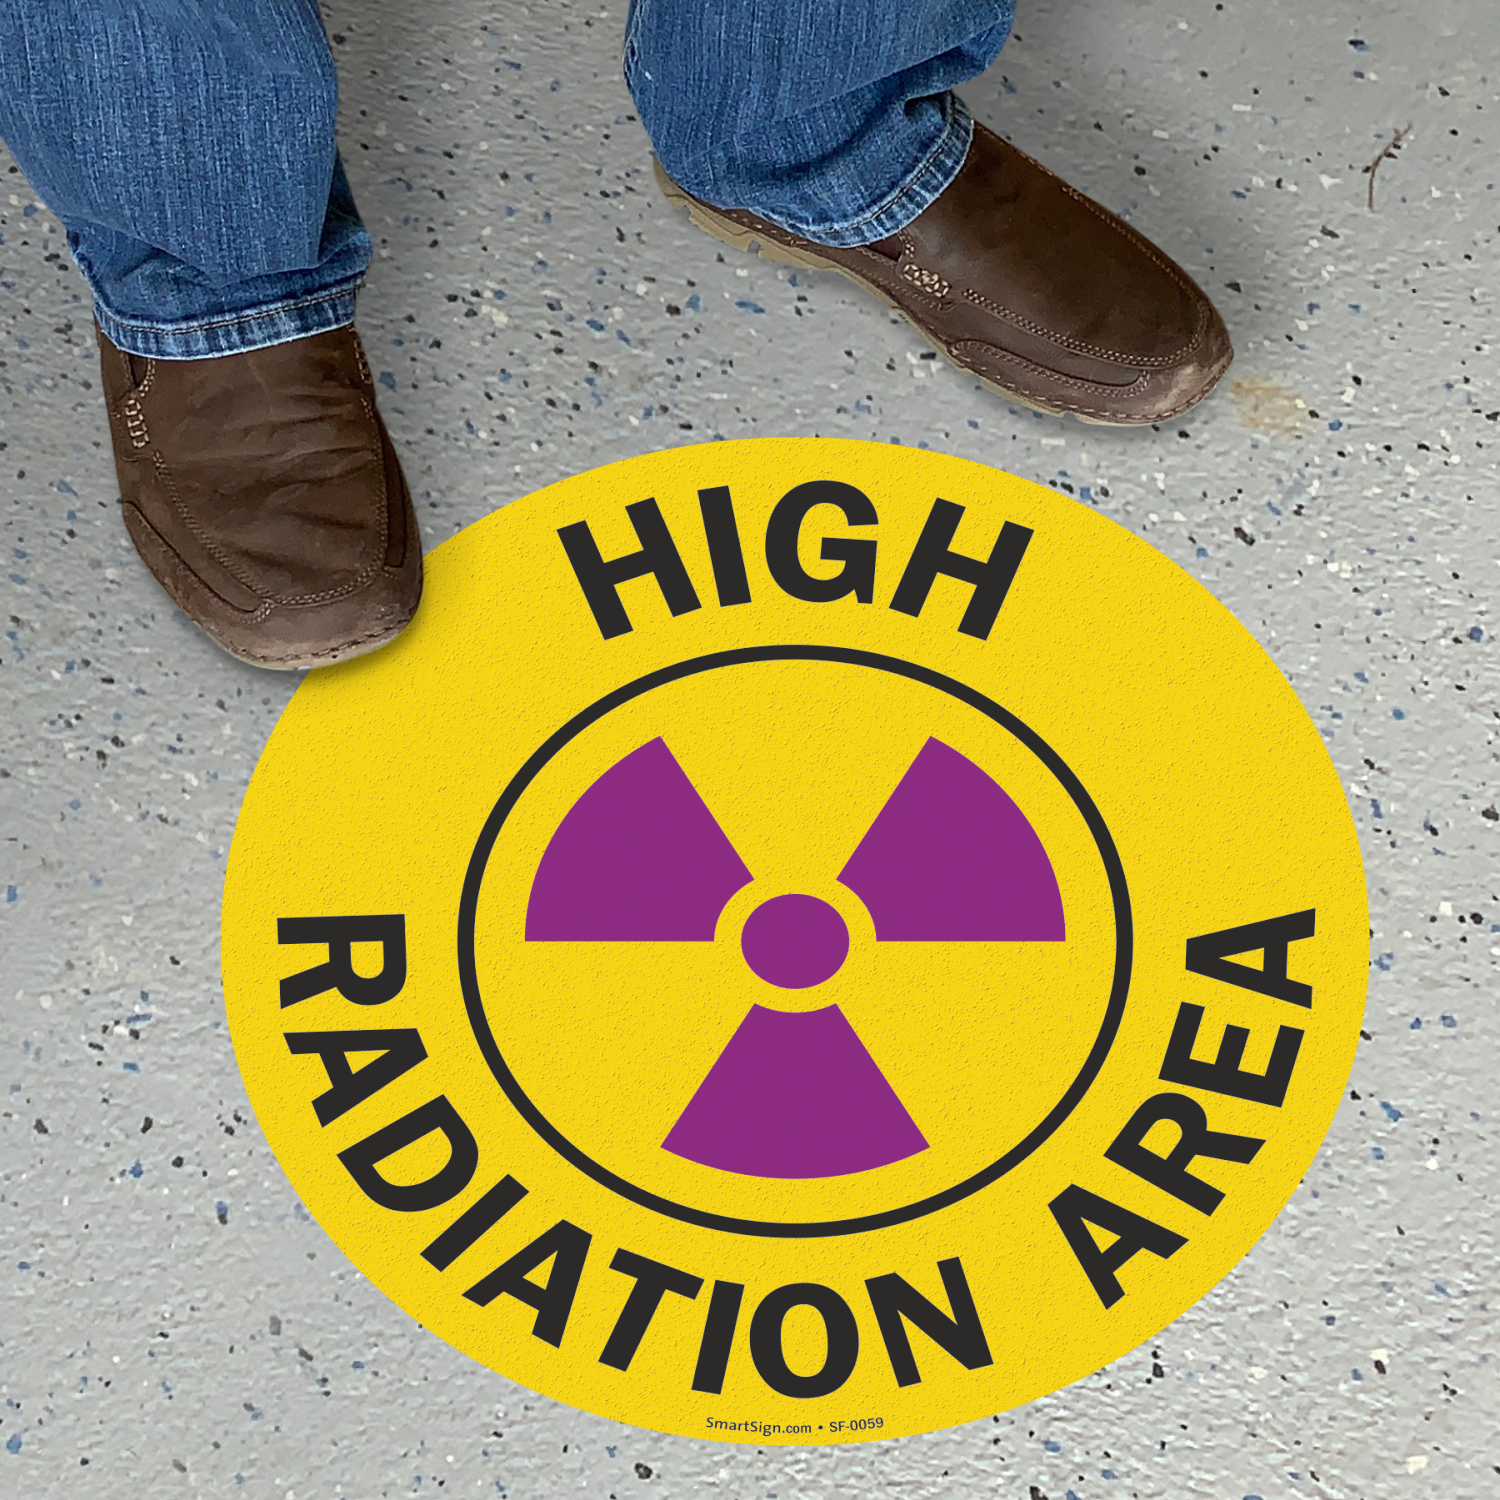 Adhesive Vinyl Floor Signs High Radiation Area, SKU SF0059